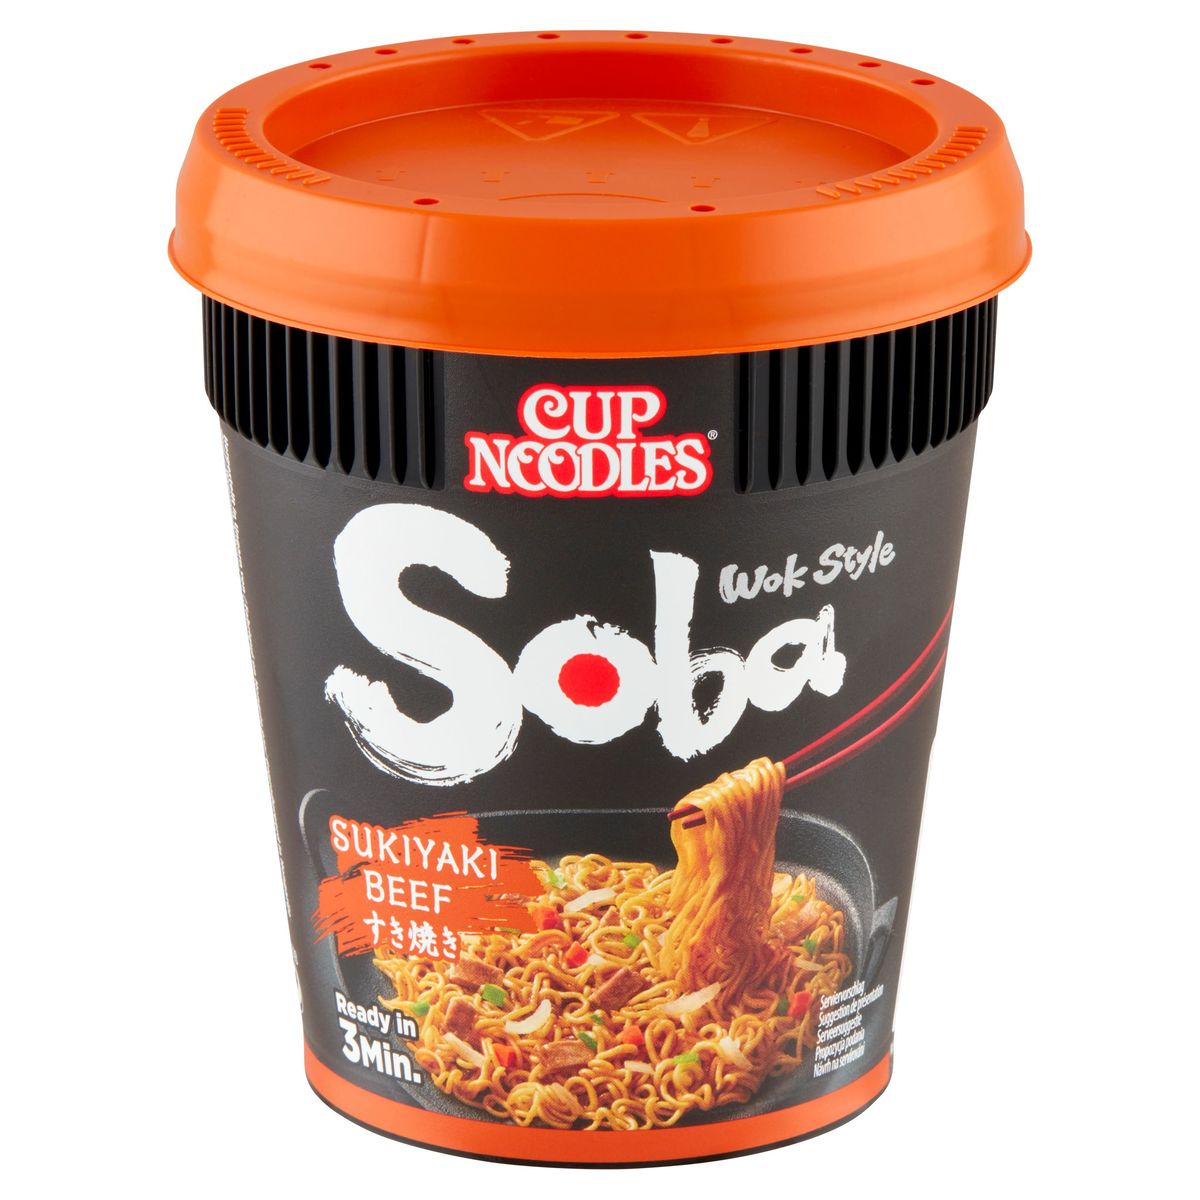 Nissin Cup Noodles Soba Wok Style Sukiyaki Beef 89 g